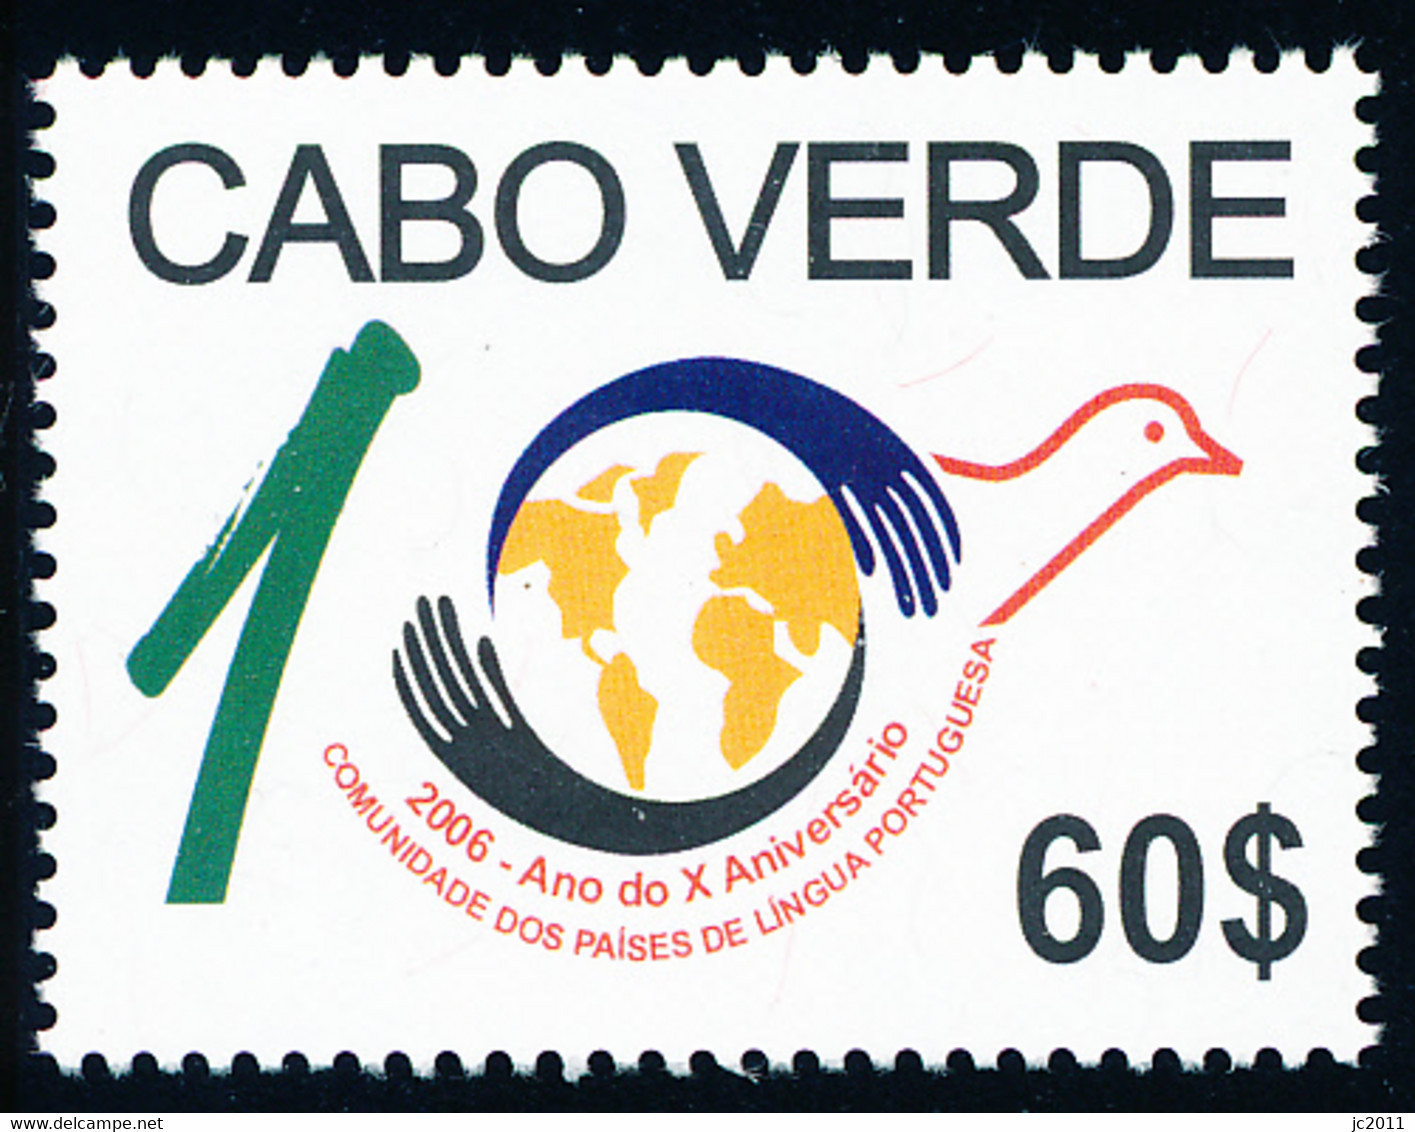 Cabo Verde - 2006 - CPLP - Community Of Countries Of Portuguese Language - Islas De Cabo Verde